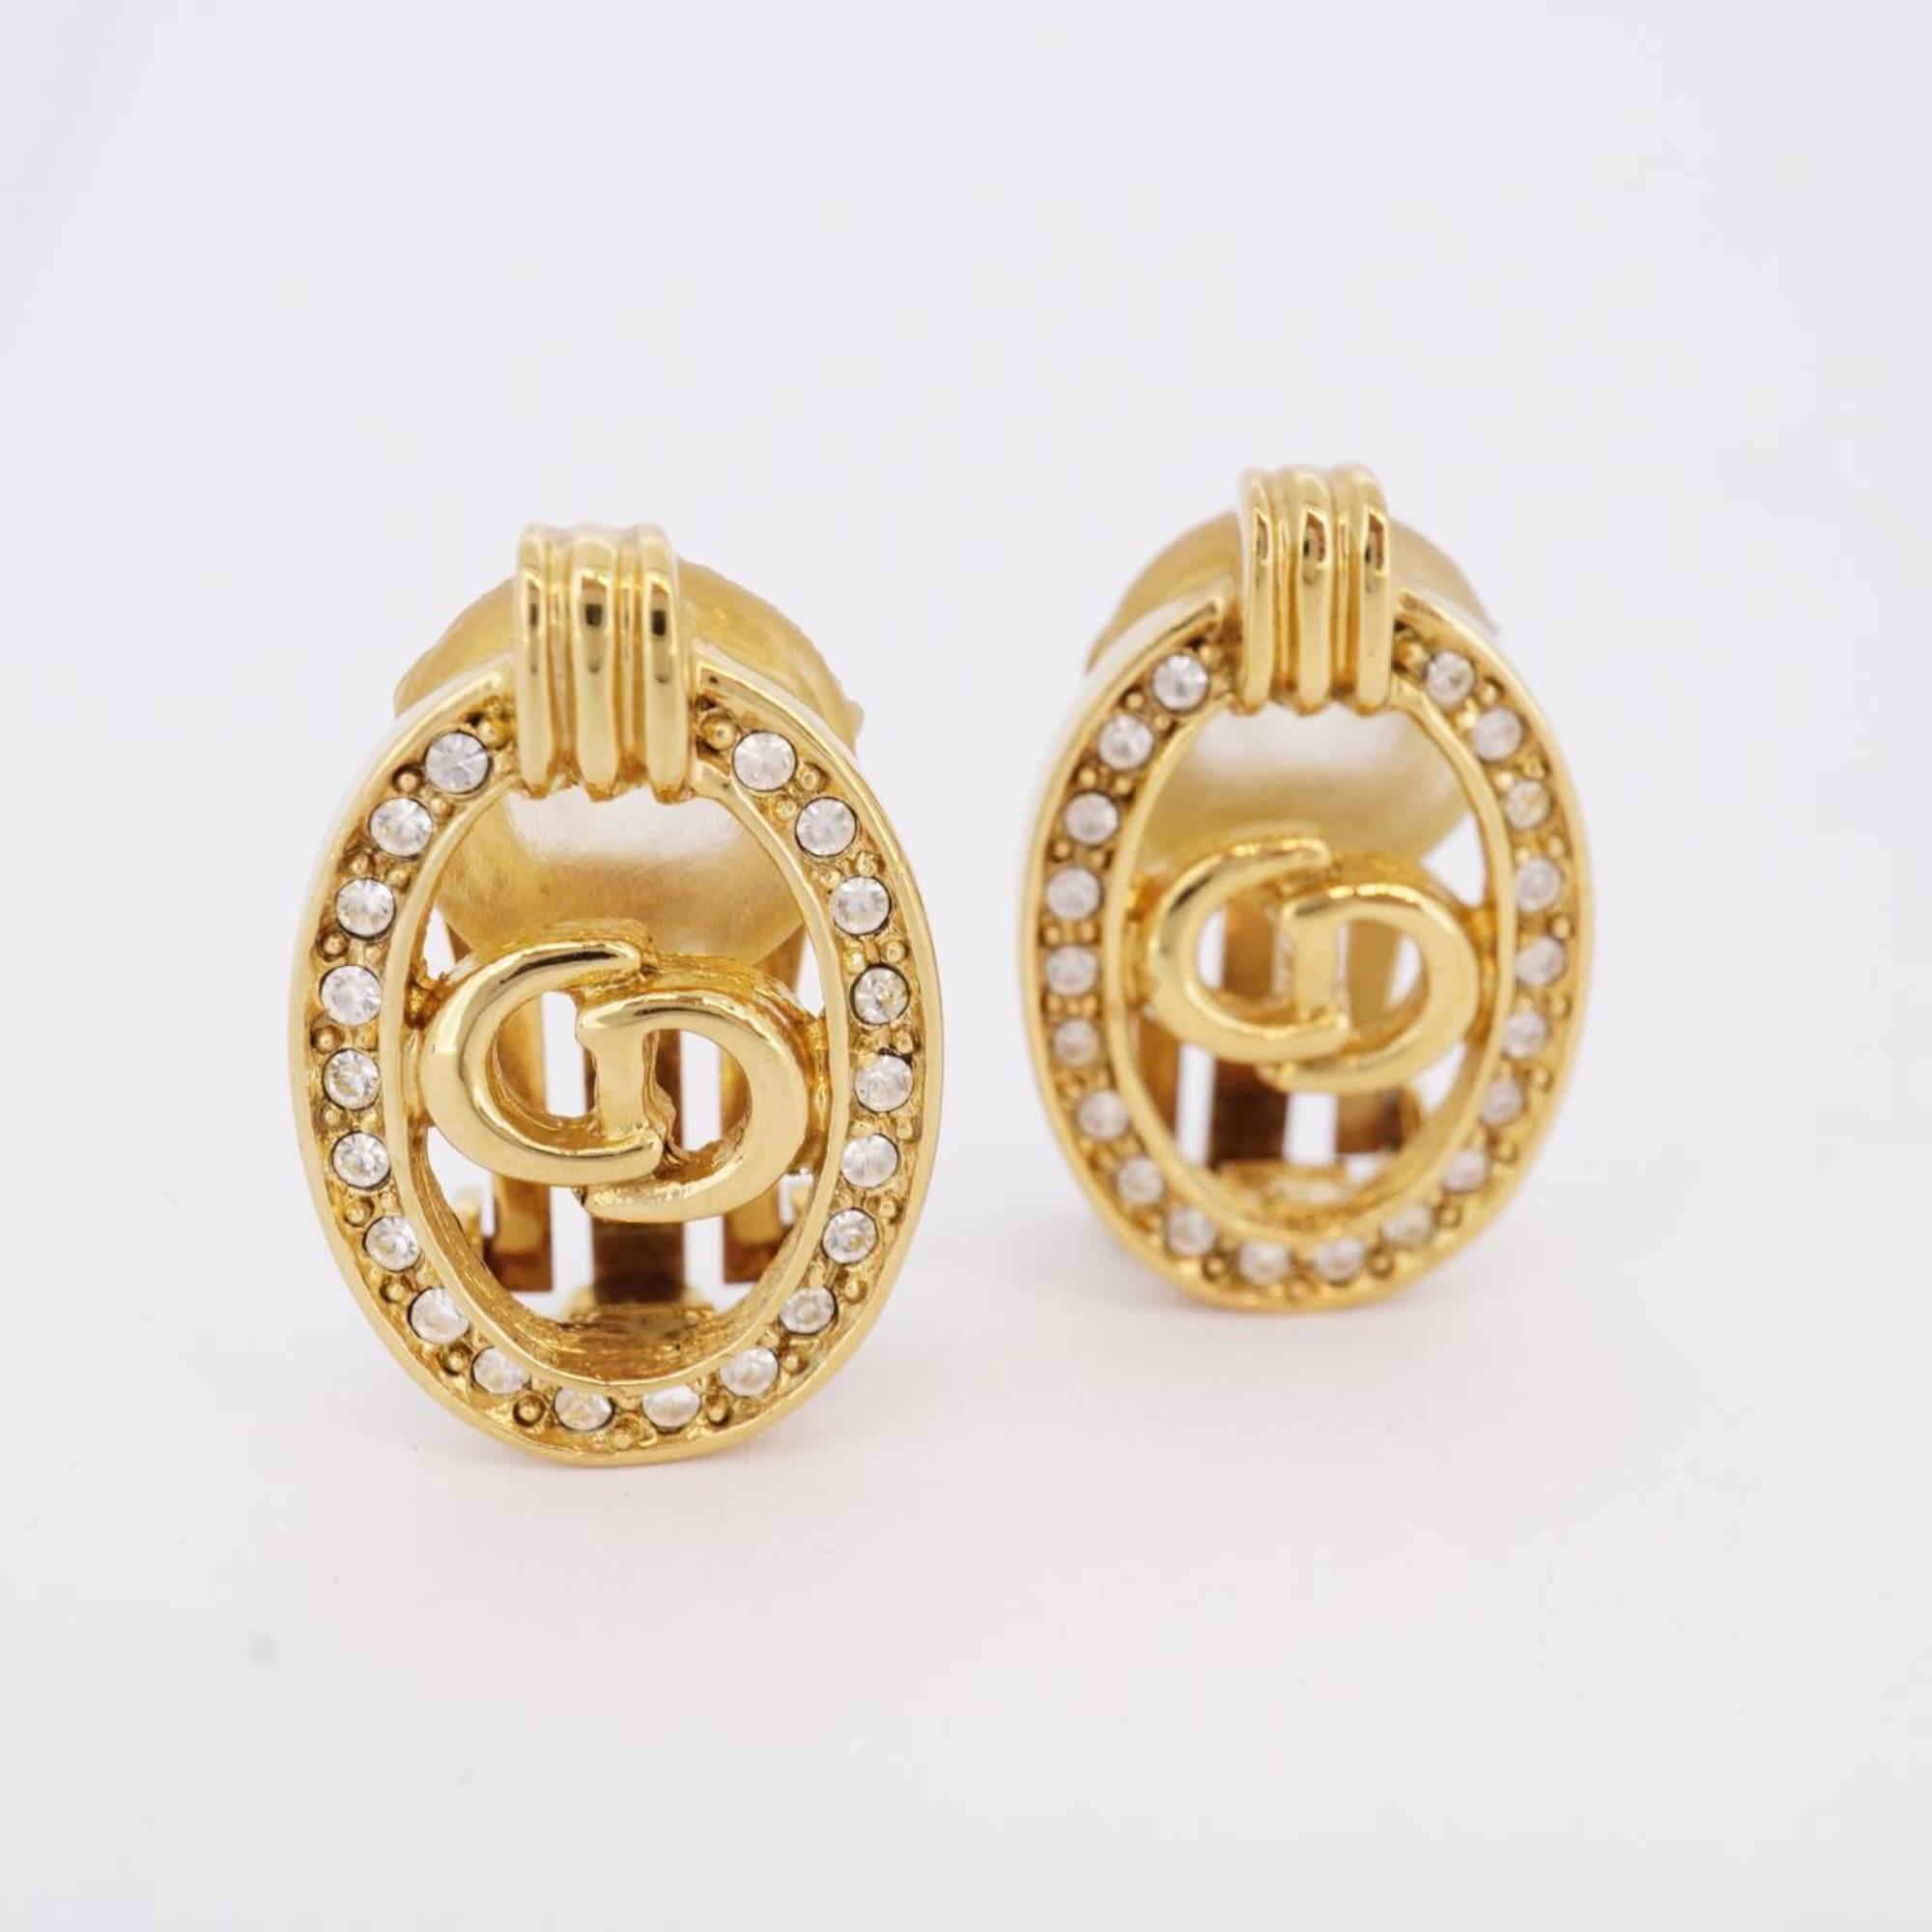 Christian Dior Earrings CD Oval Rhinestone GP Plated Gold Women's